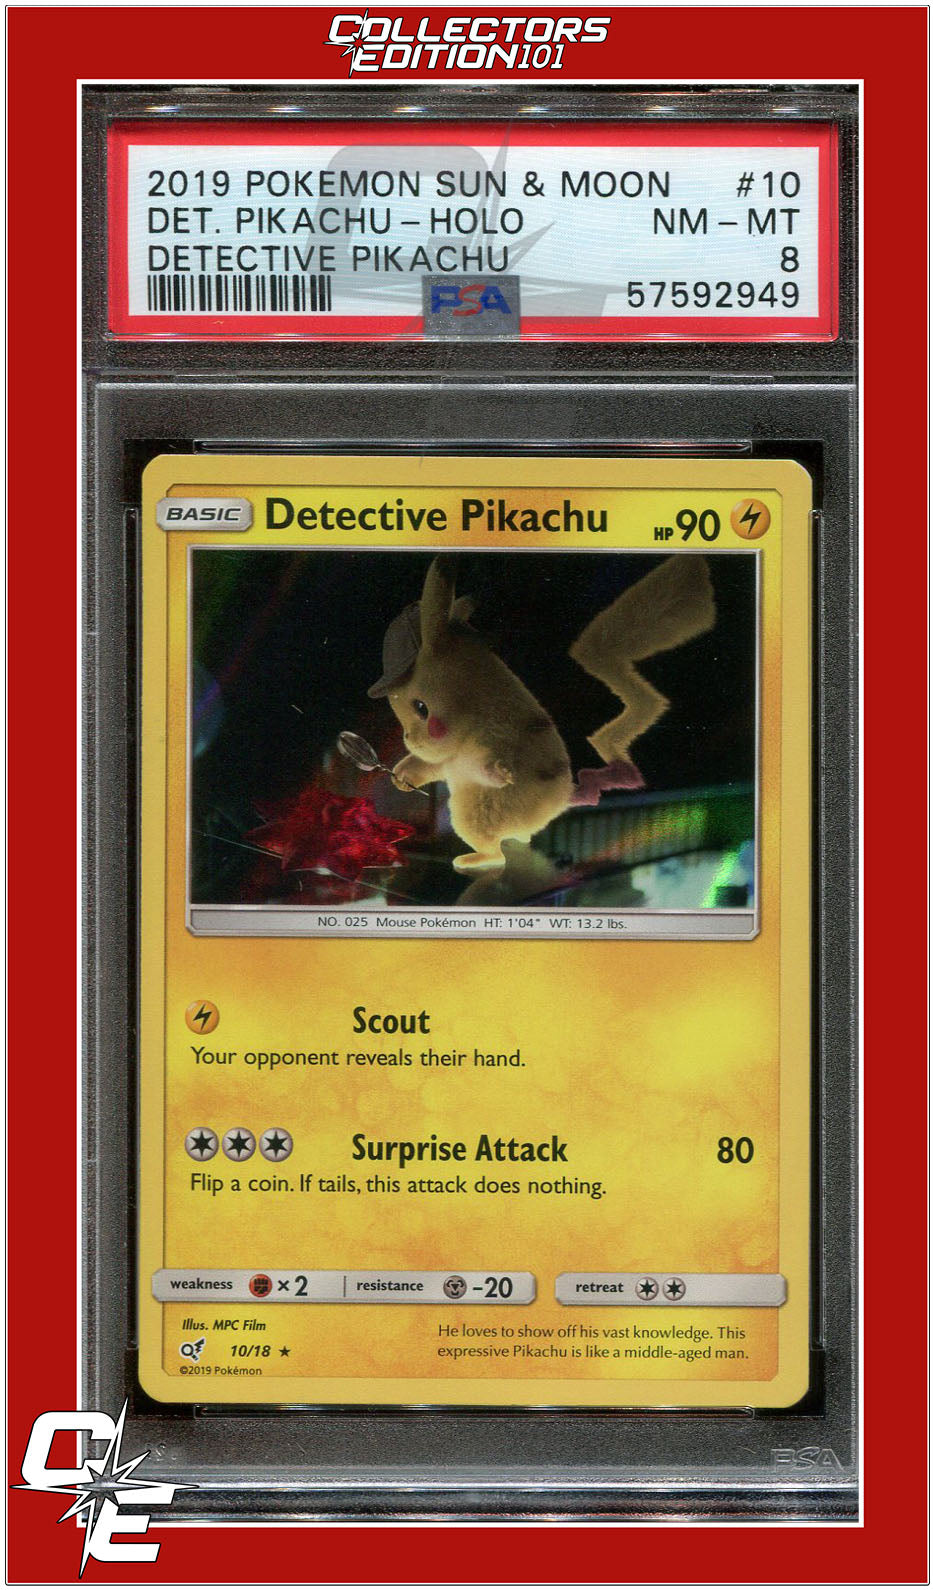 Mewtwo (12/18) [Sun & Moon: Detective Pikachu]